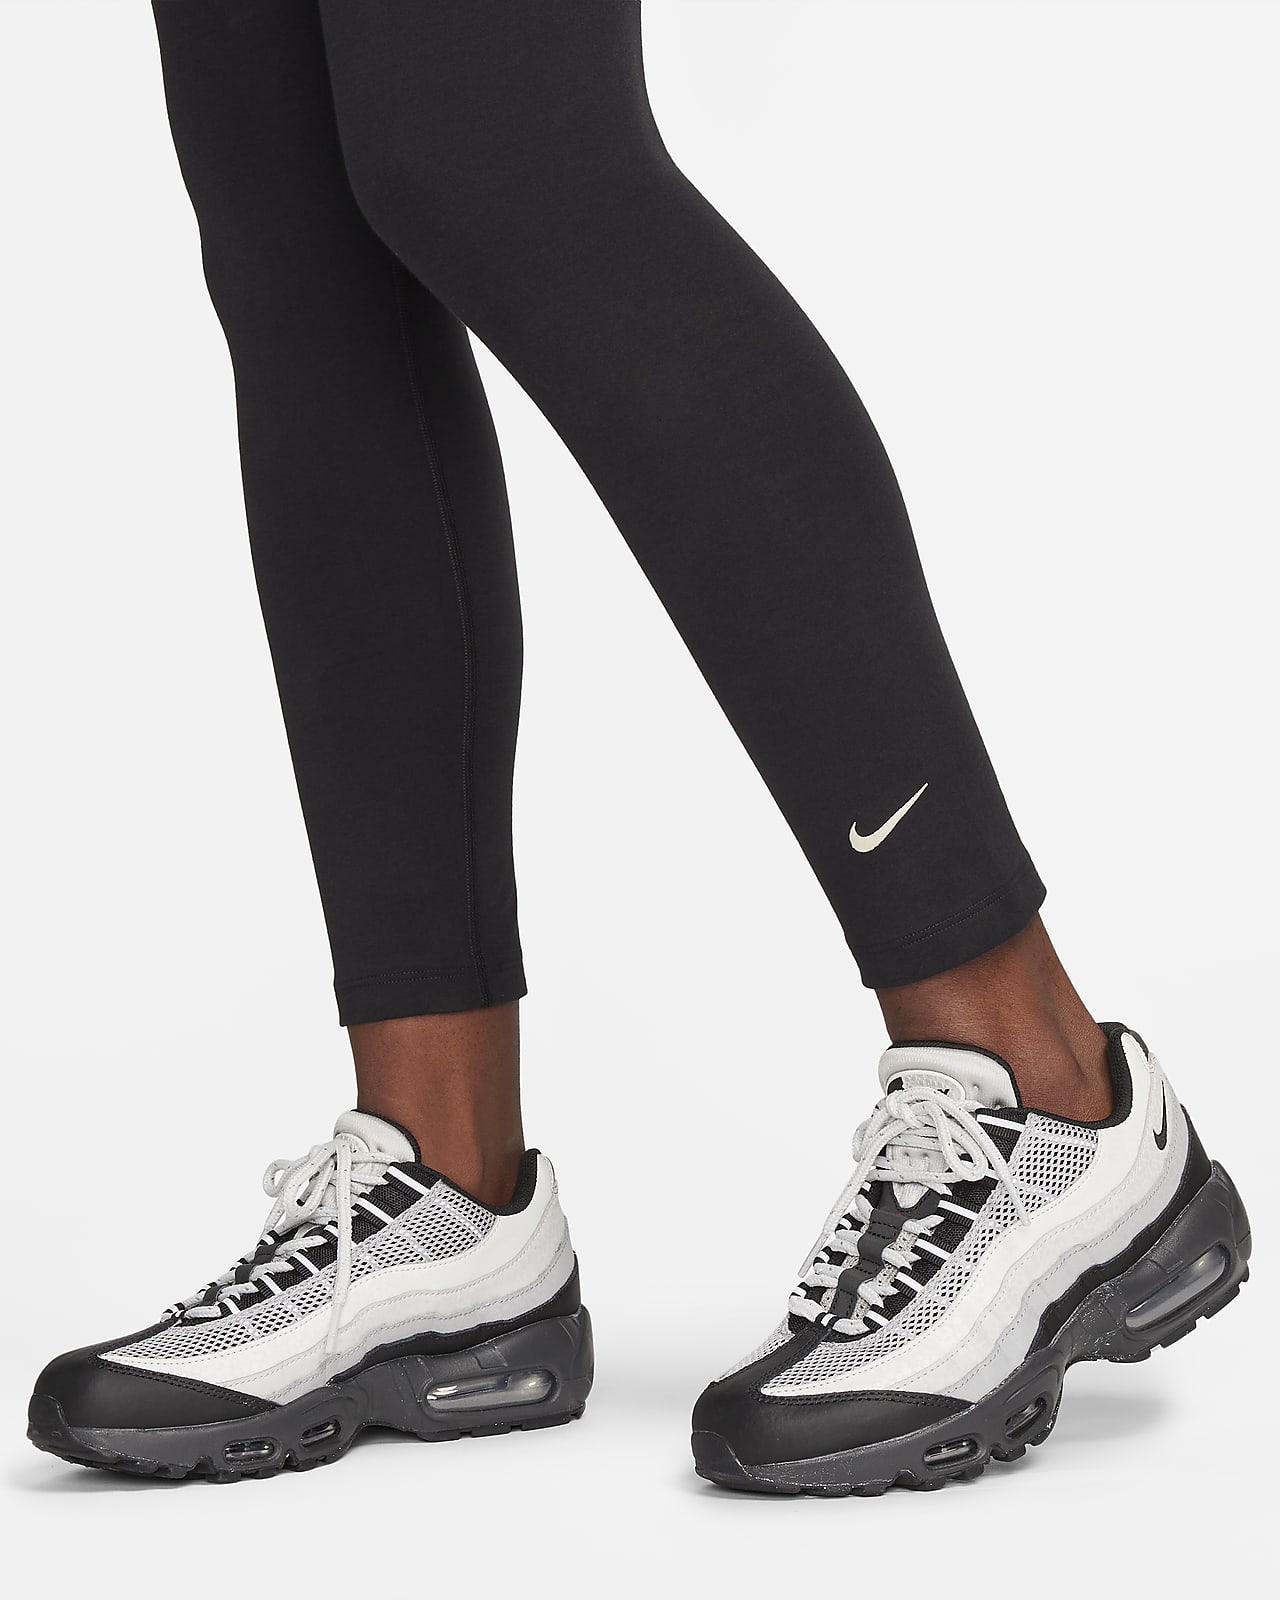 Nike, Swooshfetti Leggings, Black